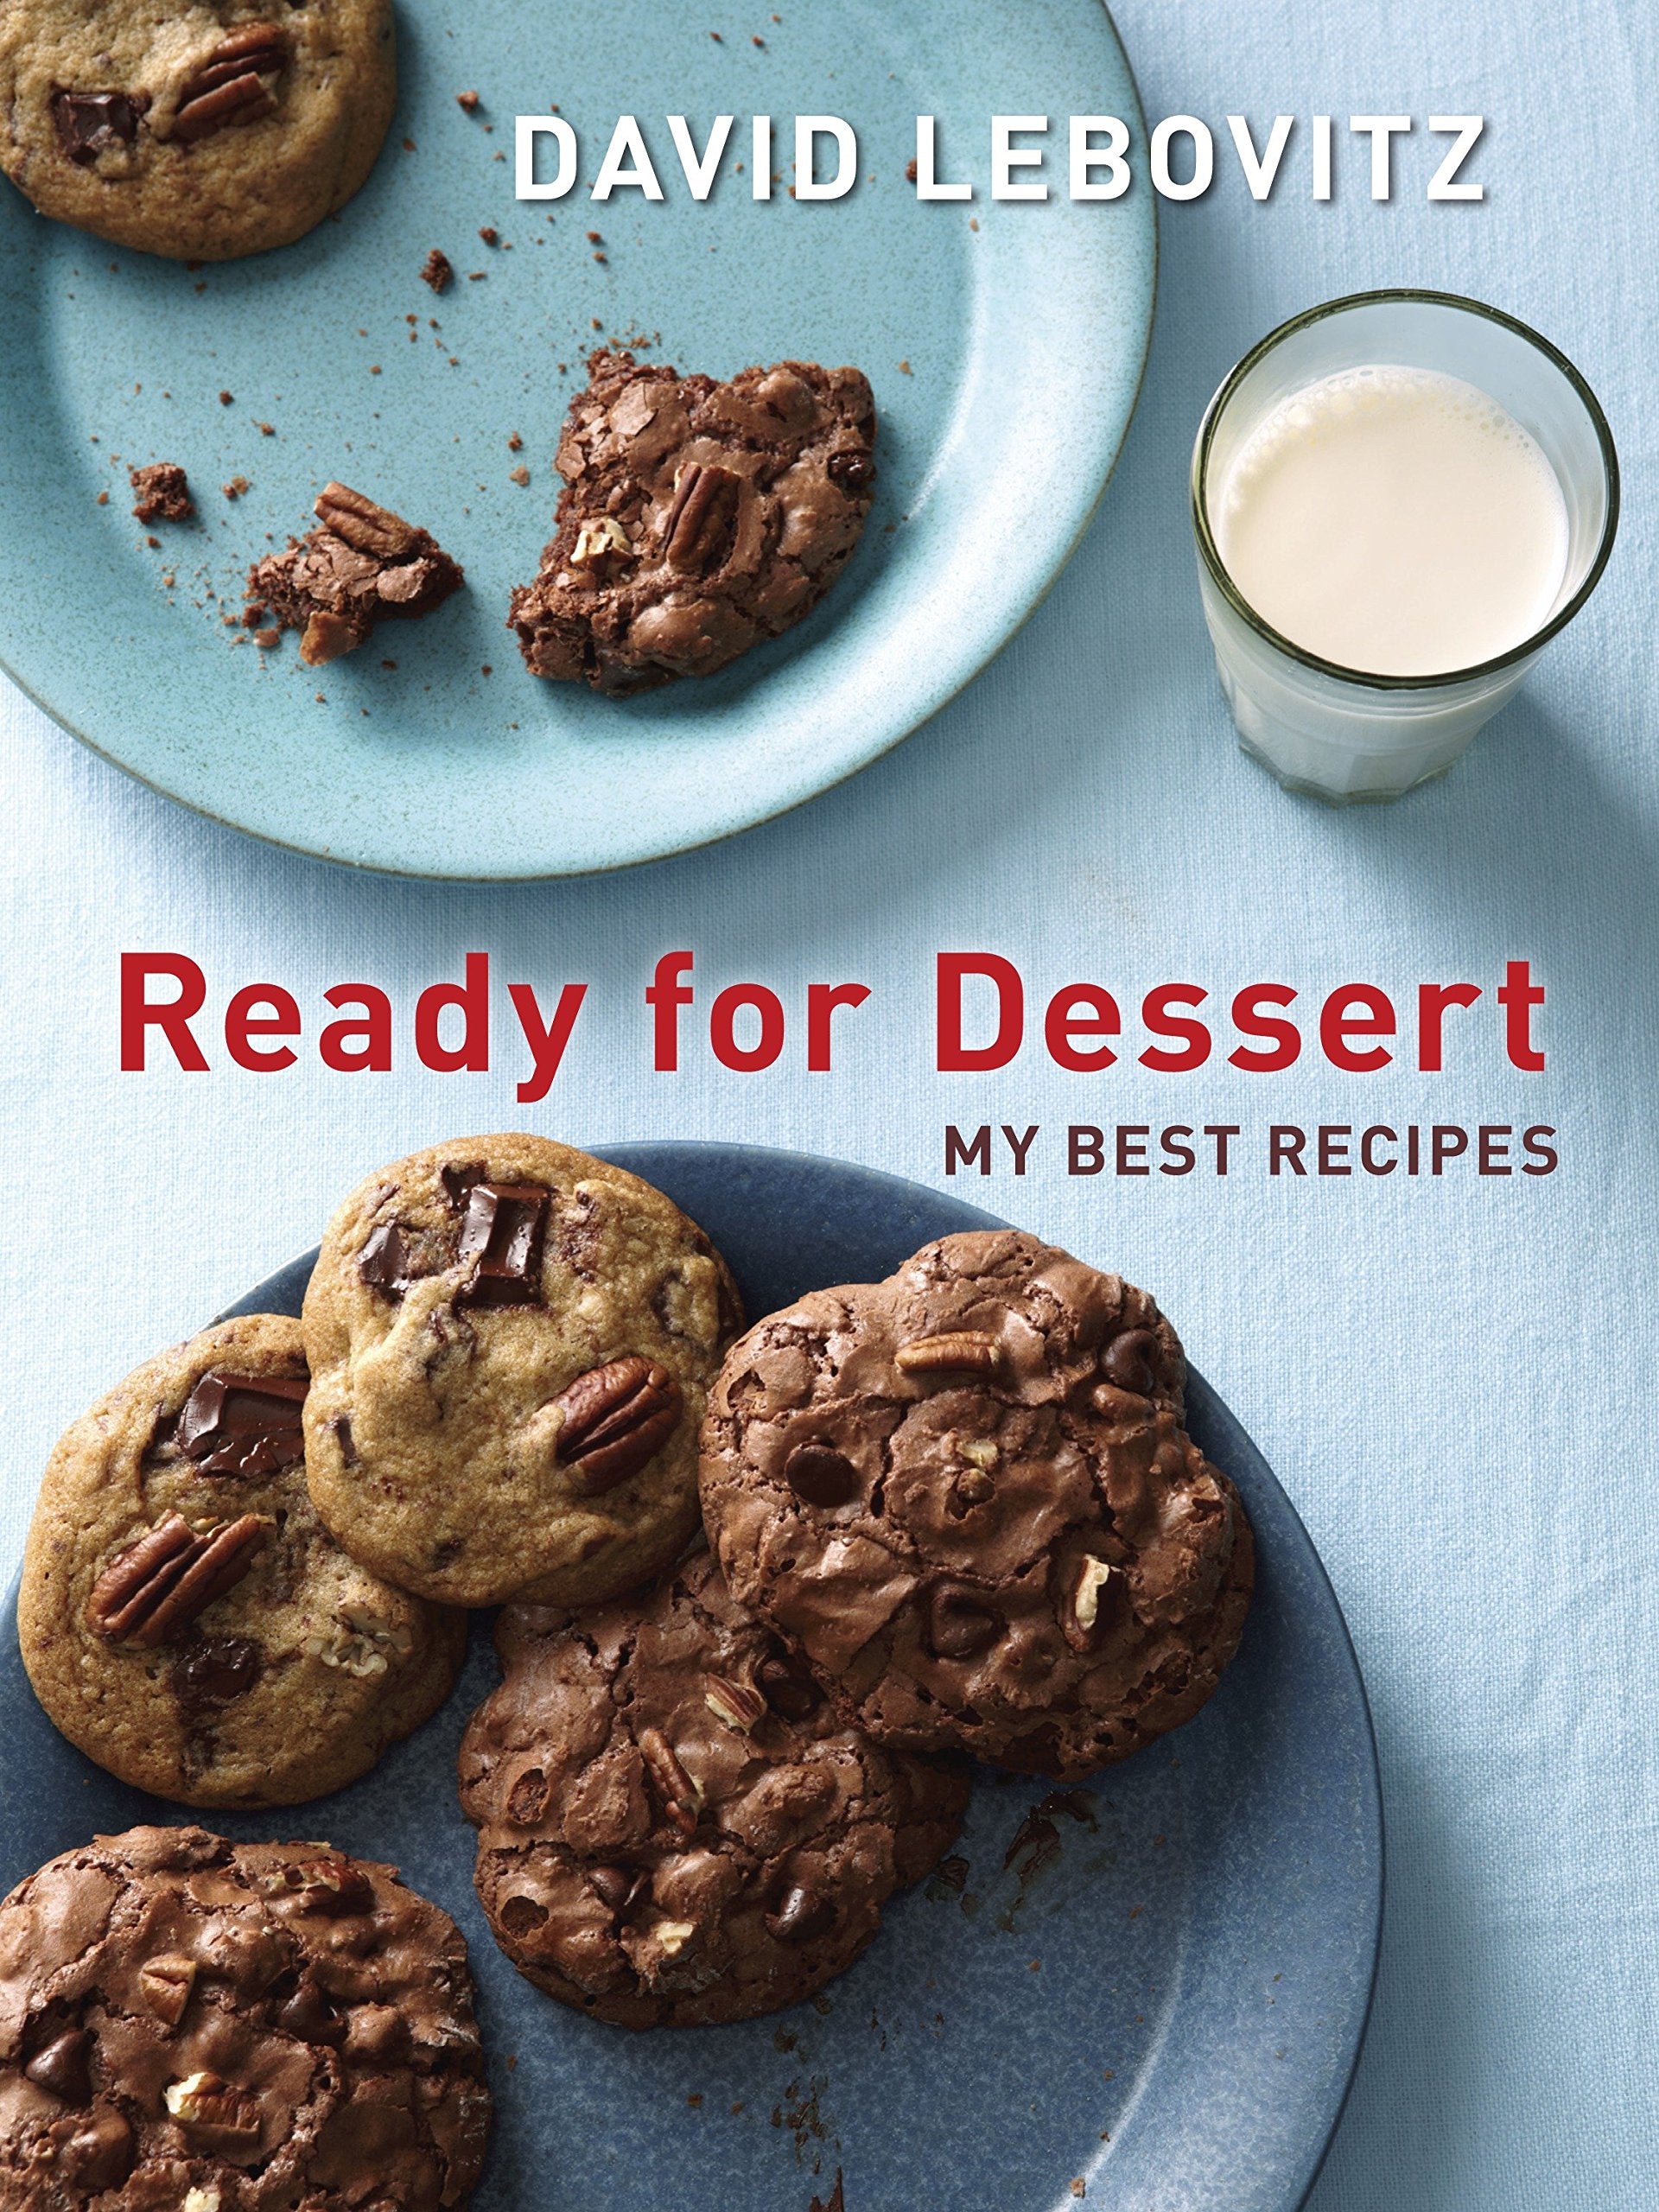 Ready for Dessert: My Best Recipes (David Lebovitz) *Signed*